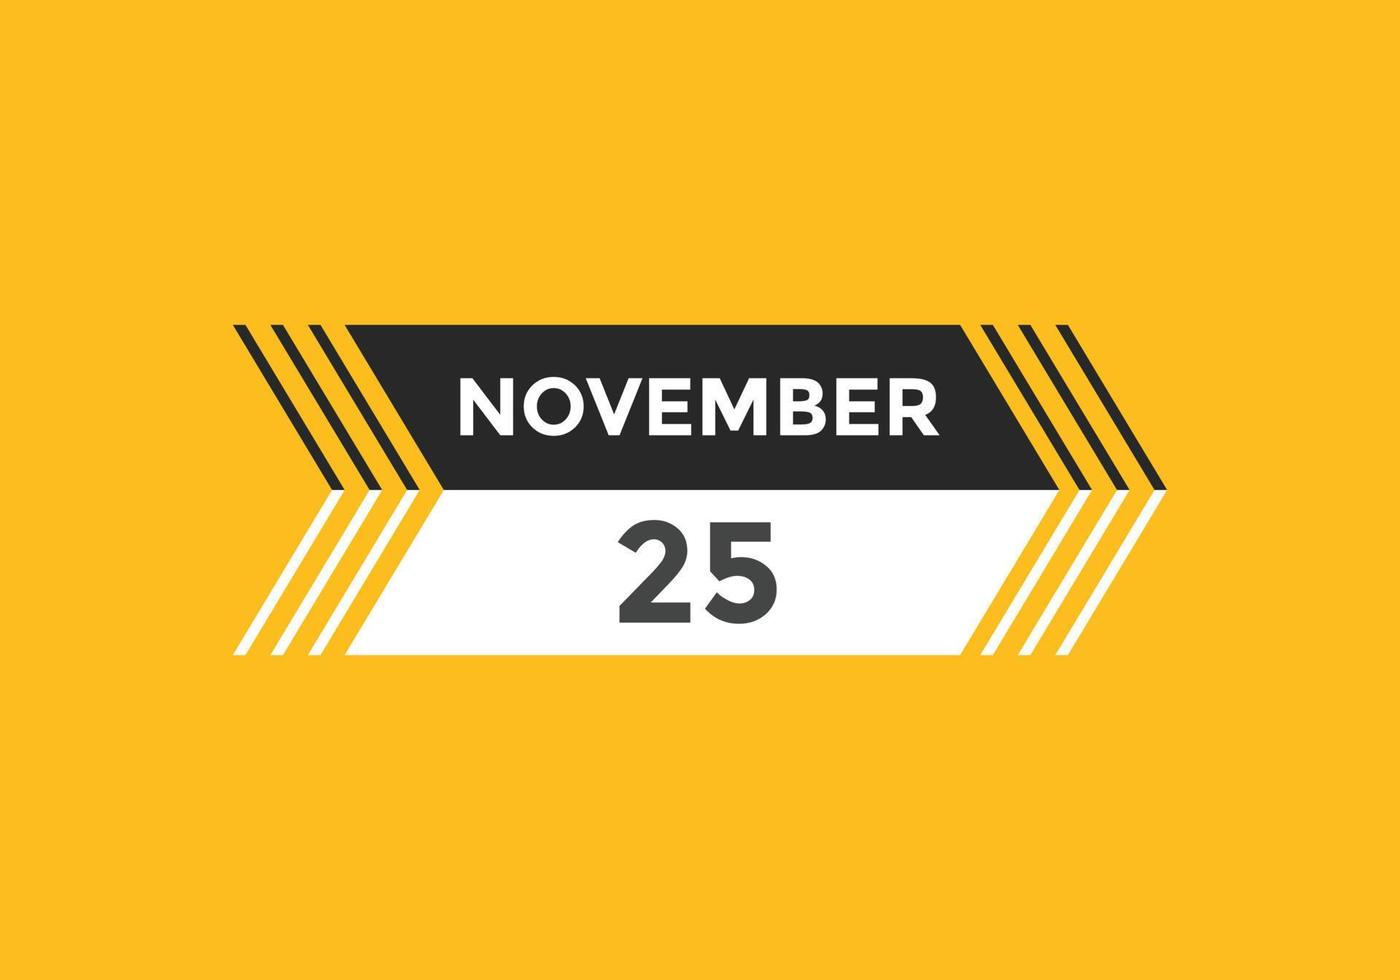 november 25 calendar reminder. 25th november daily calendar icon template. Calendar 25th november icon Design template. Vector illustration